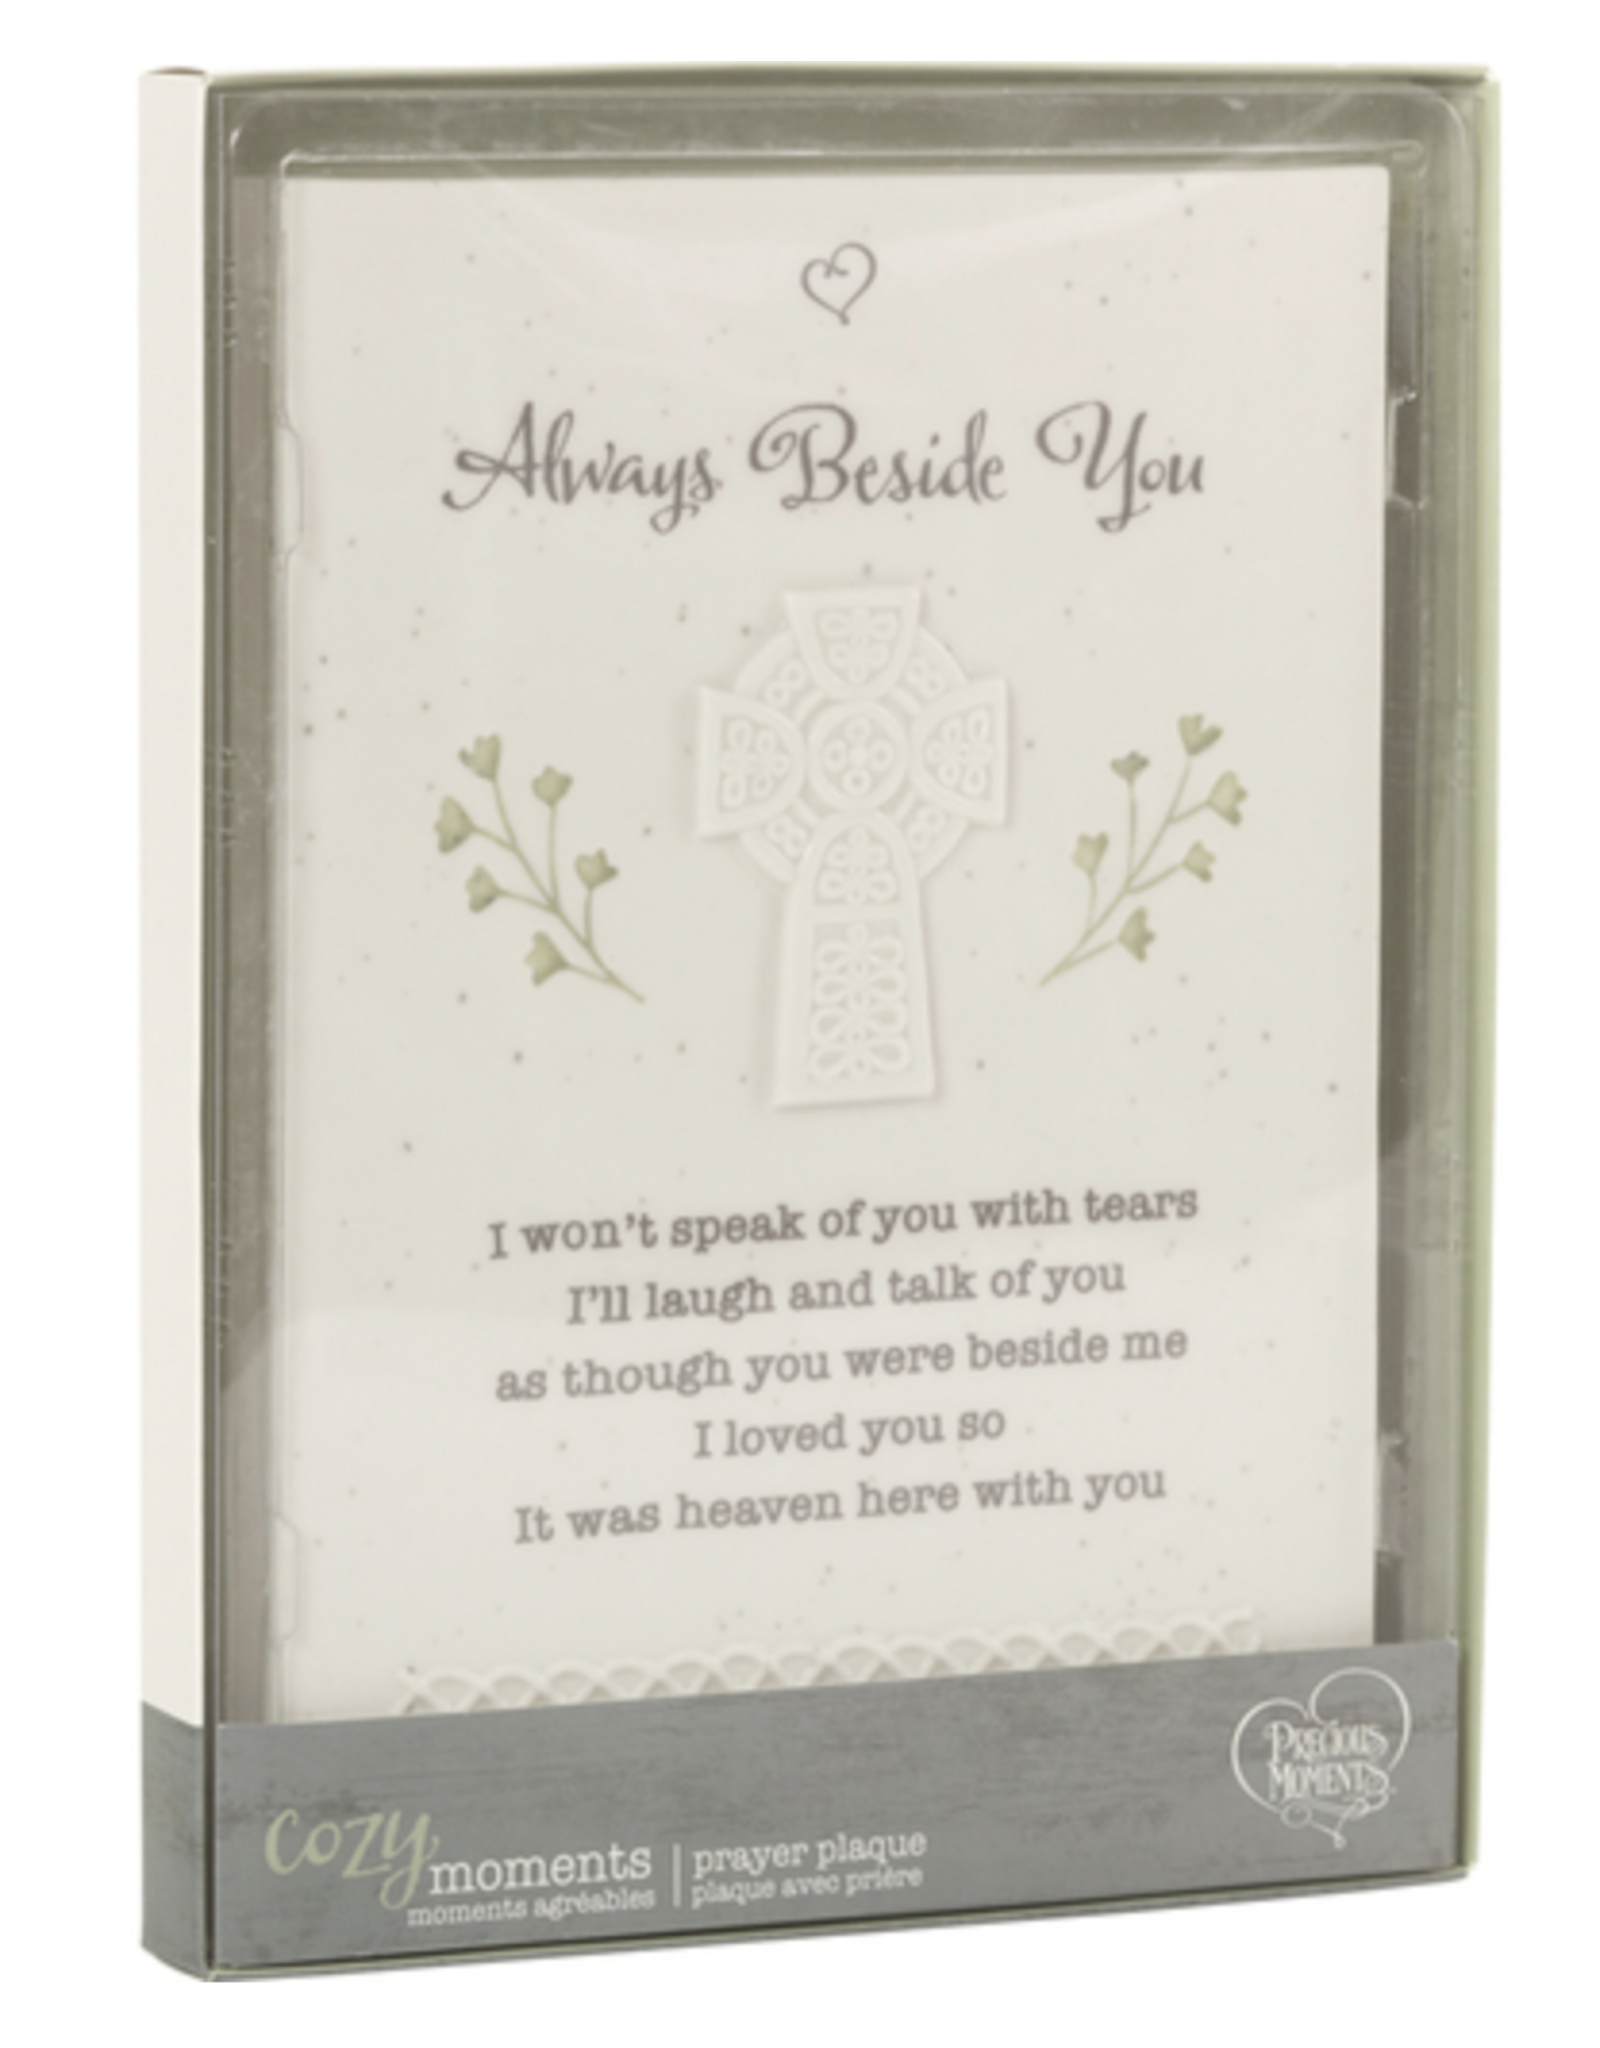 Precious Moments - Always Beside You, Ceramic Prayer Plaque (Remembrance)